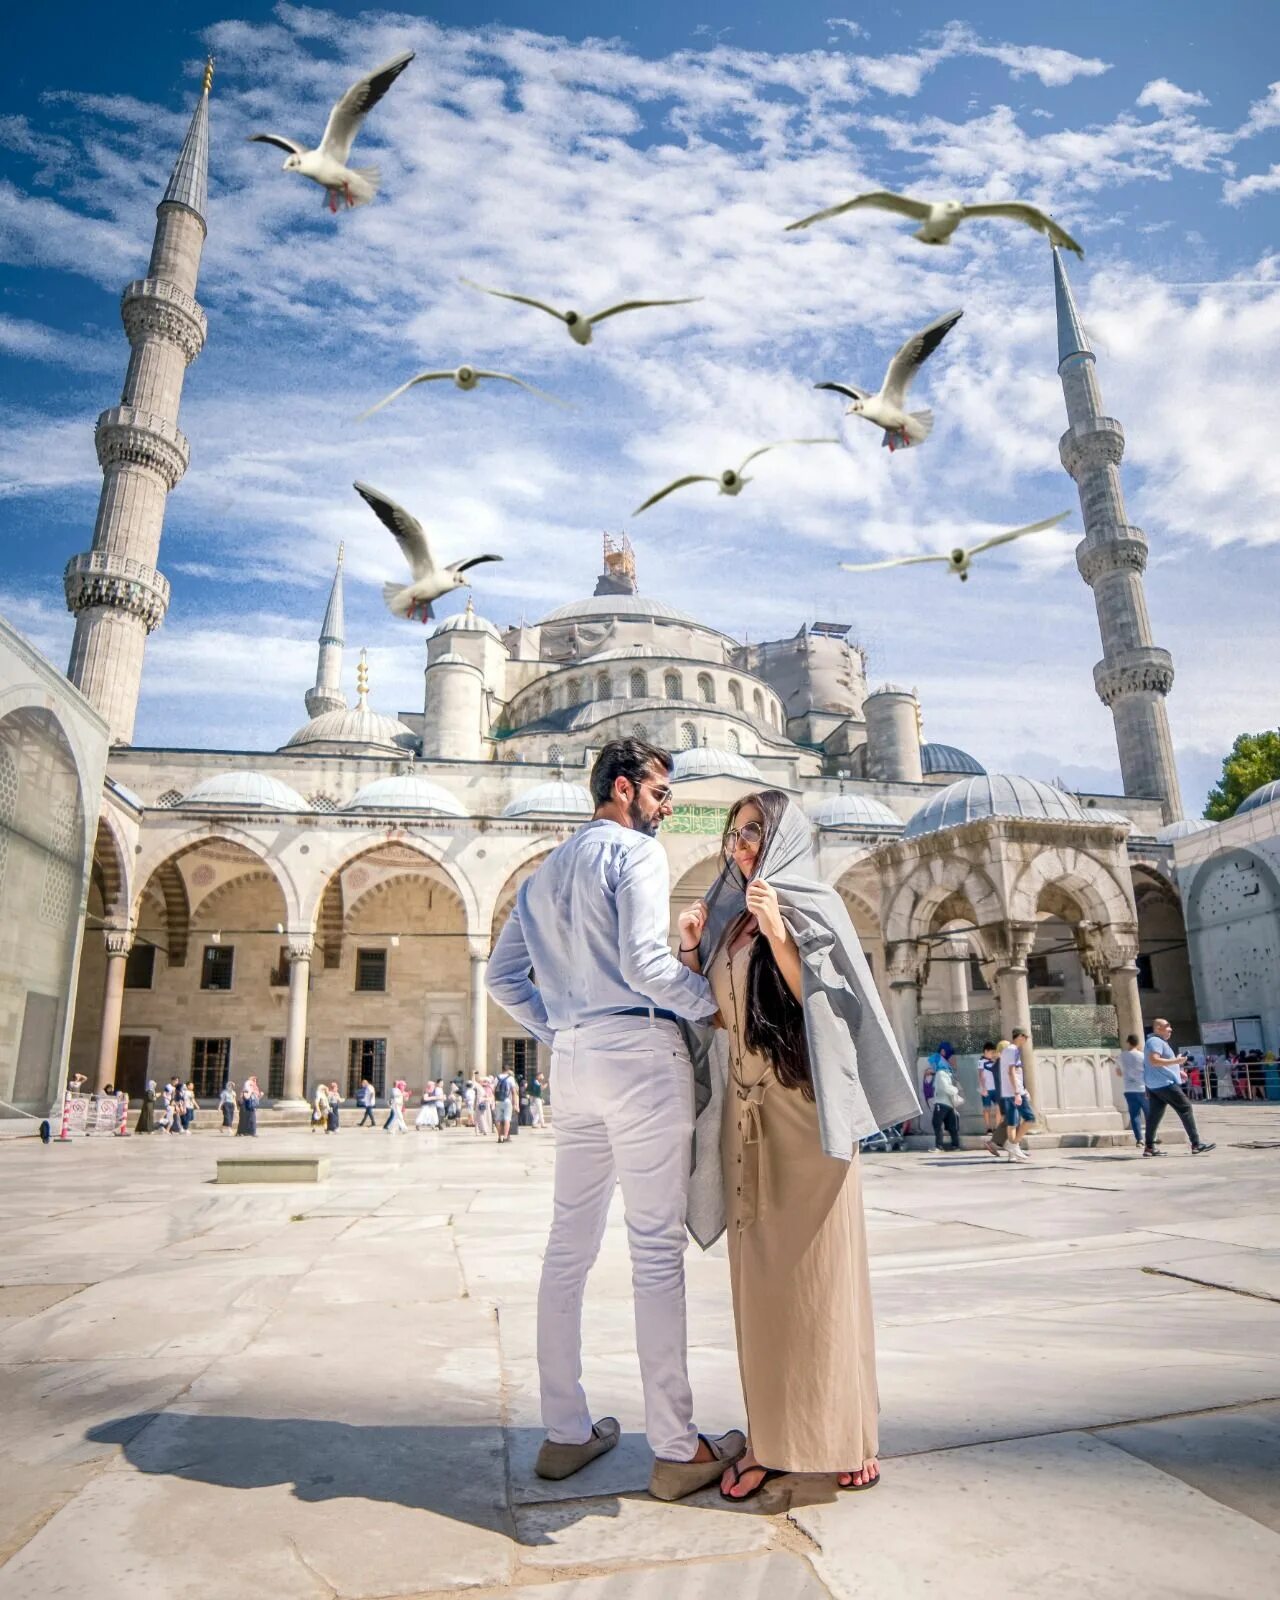 Travel турция. Стамбул Турция. Турция путешествие в Стамбул. Стамбул город влюбленных. Влюбленные в Стамбуле.